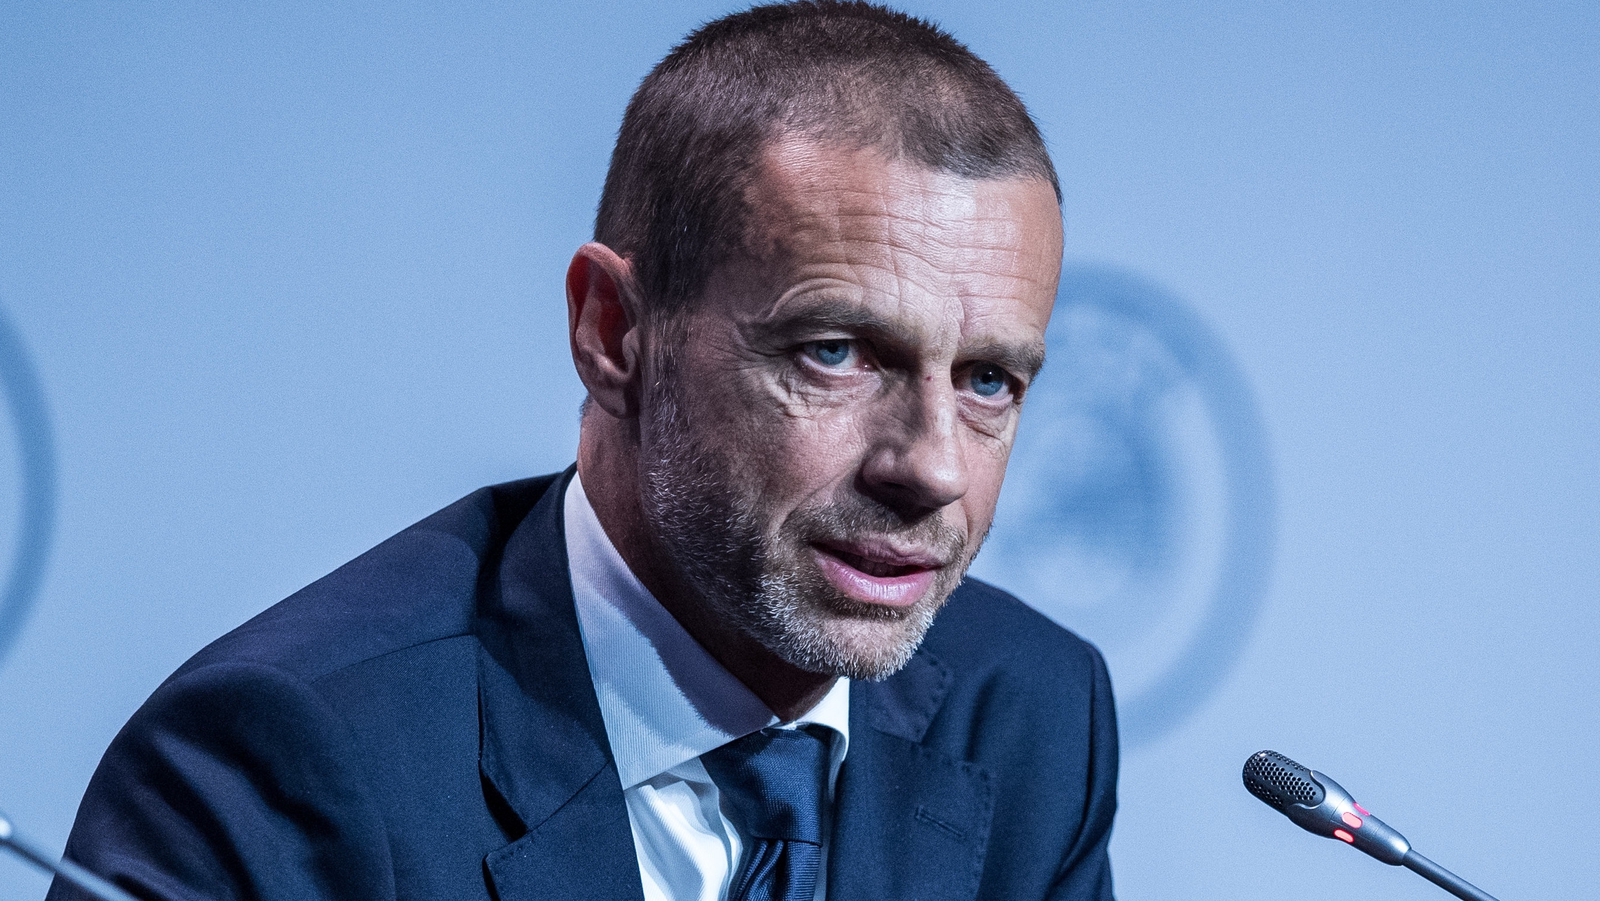 UEFA boss on racism - 'Things need to change'